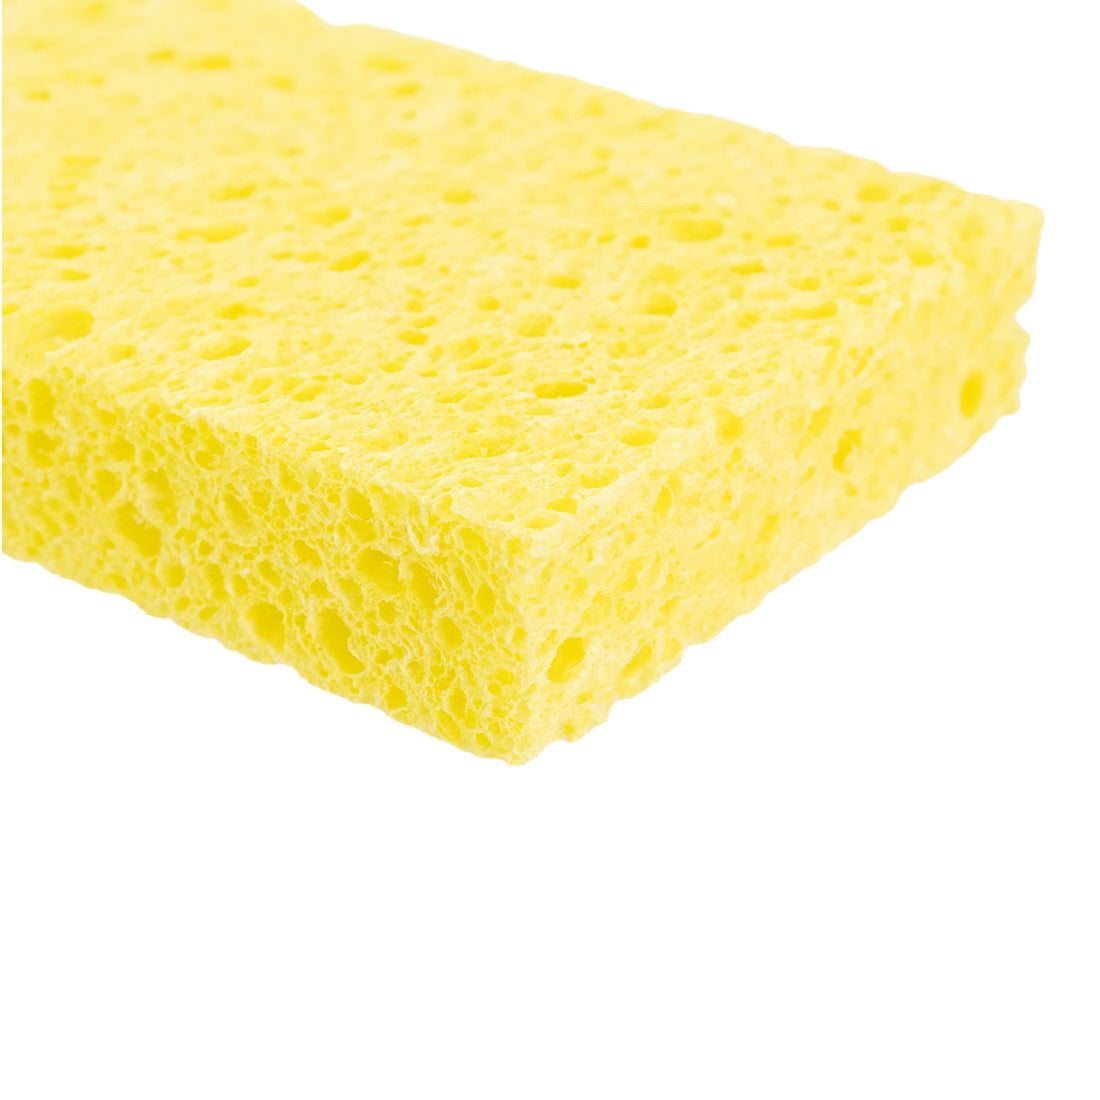 World Enterprises Cellulose Sponge Corner View